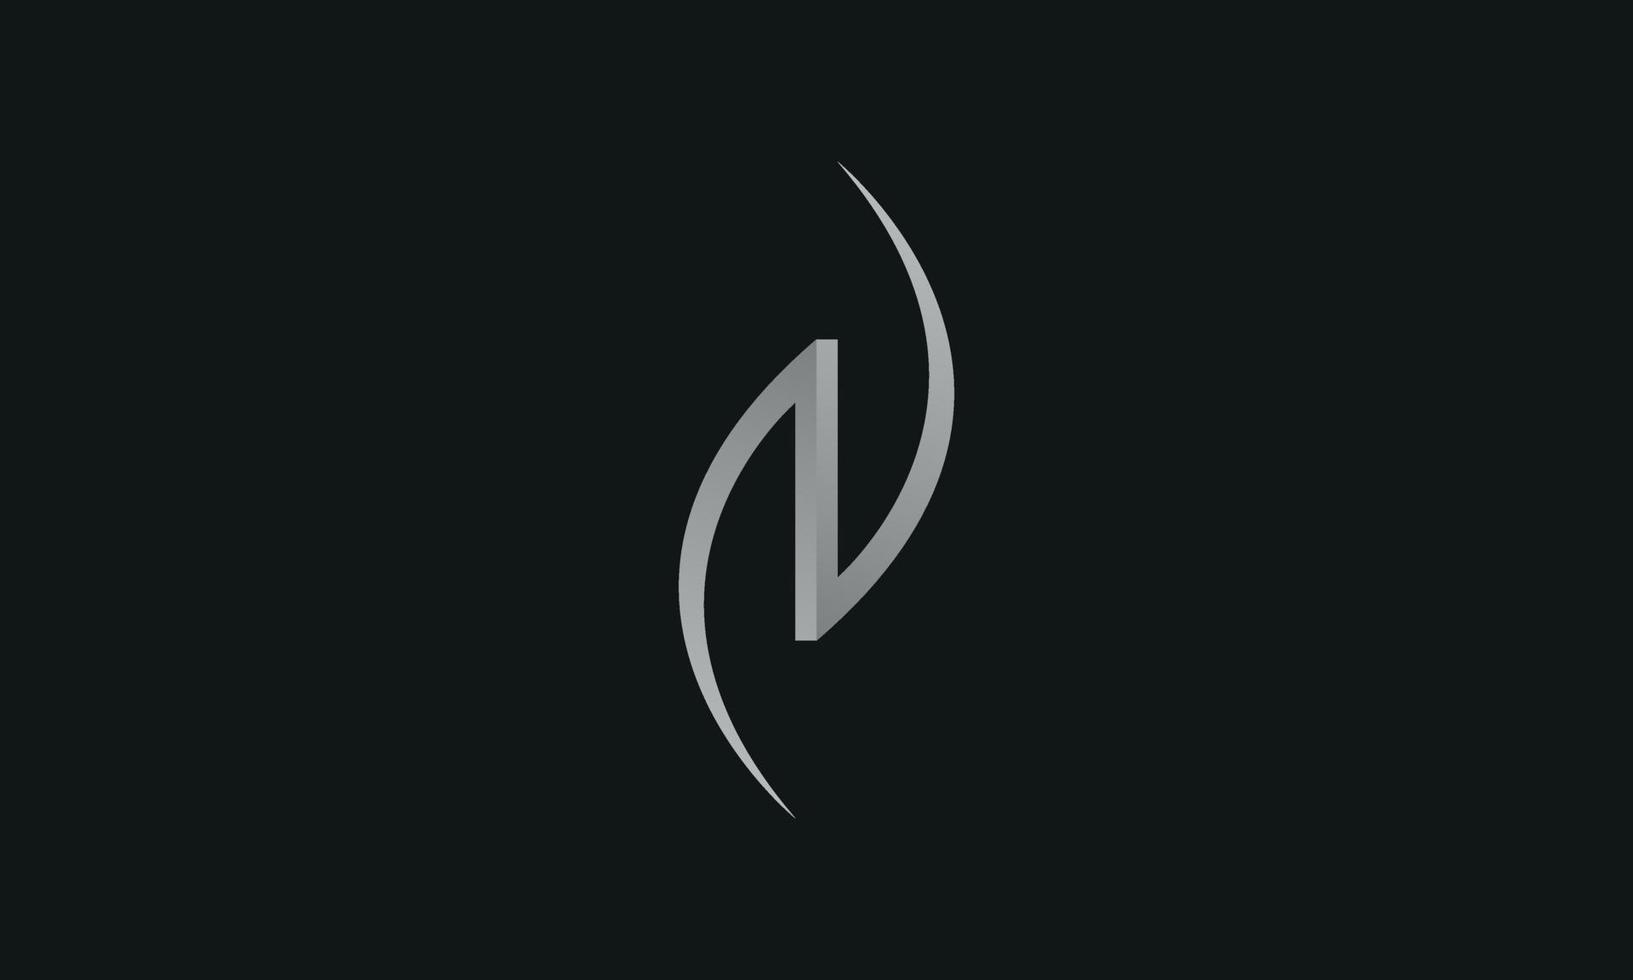 Buchstabe n-Logo. n-Logo-Icon-Design-Vektor-Illustration kostenloser Vektor